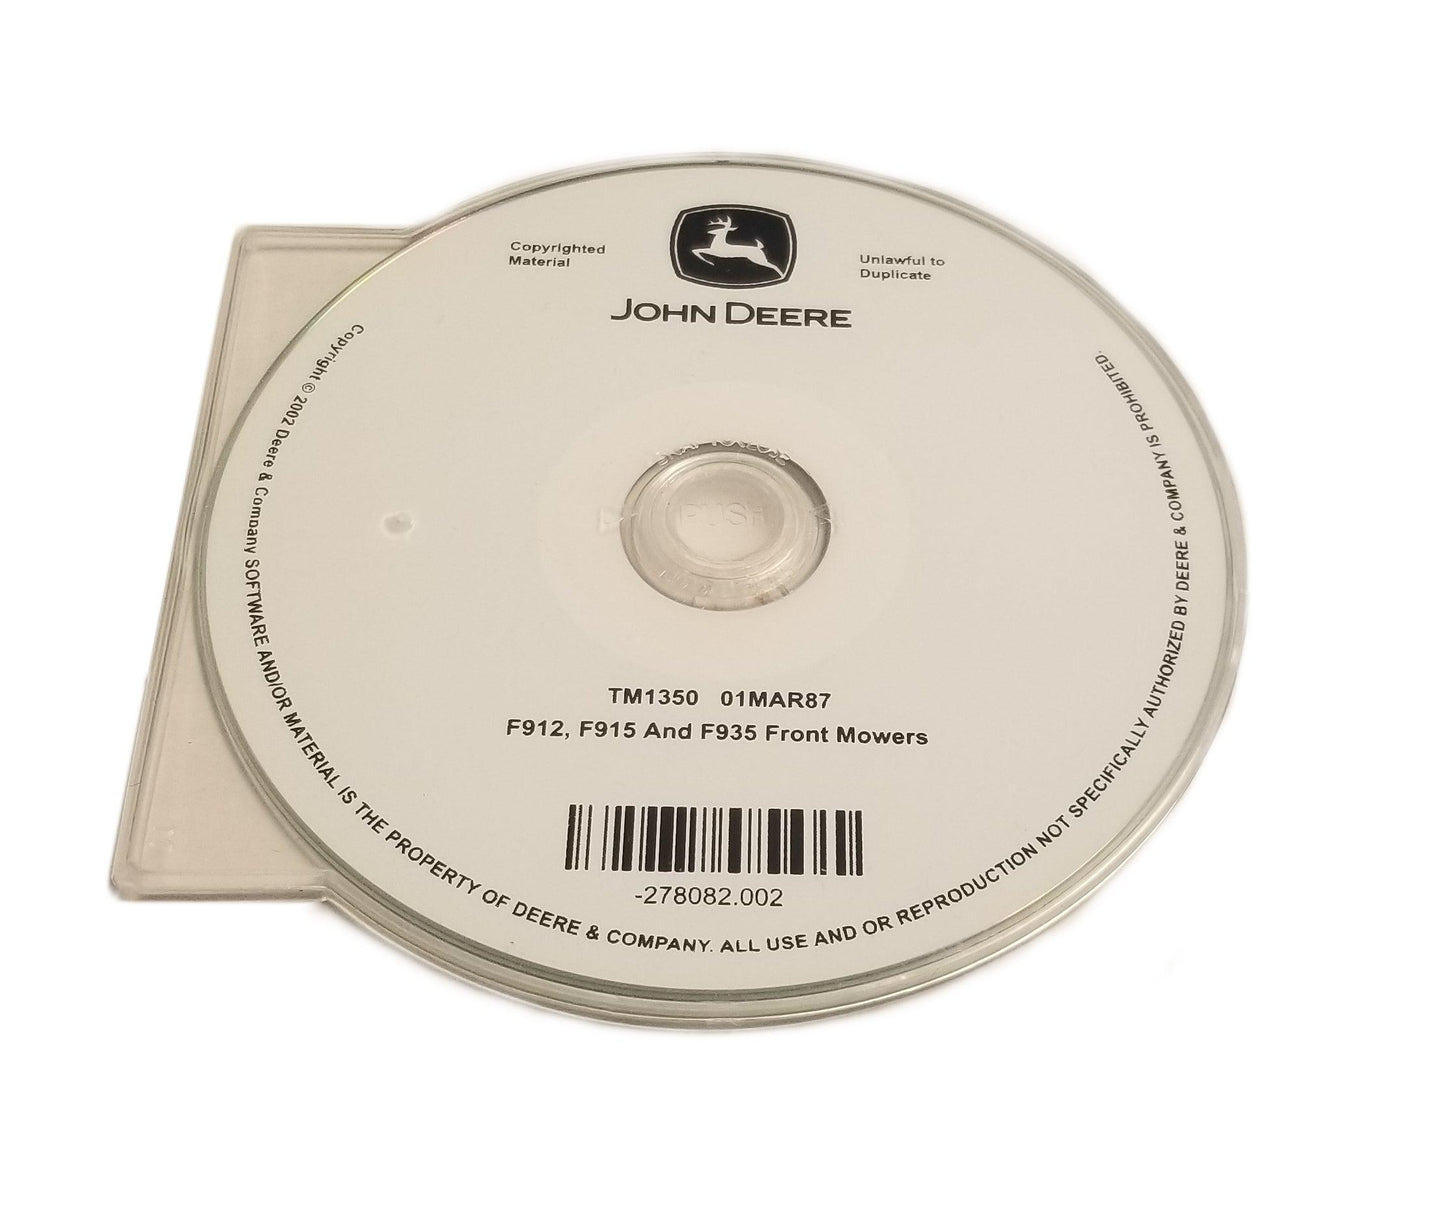 John Deere F912/F915/F935 Front Mowers Technical Manual CD - TM1350CD